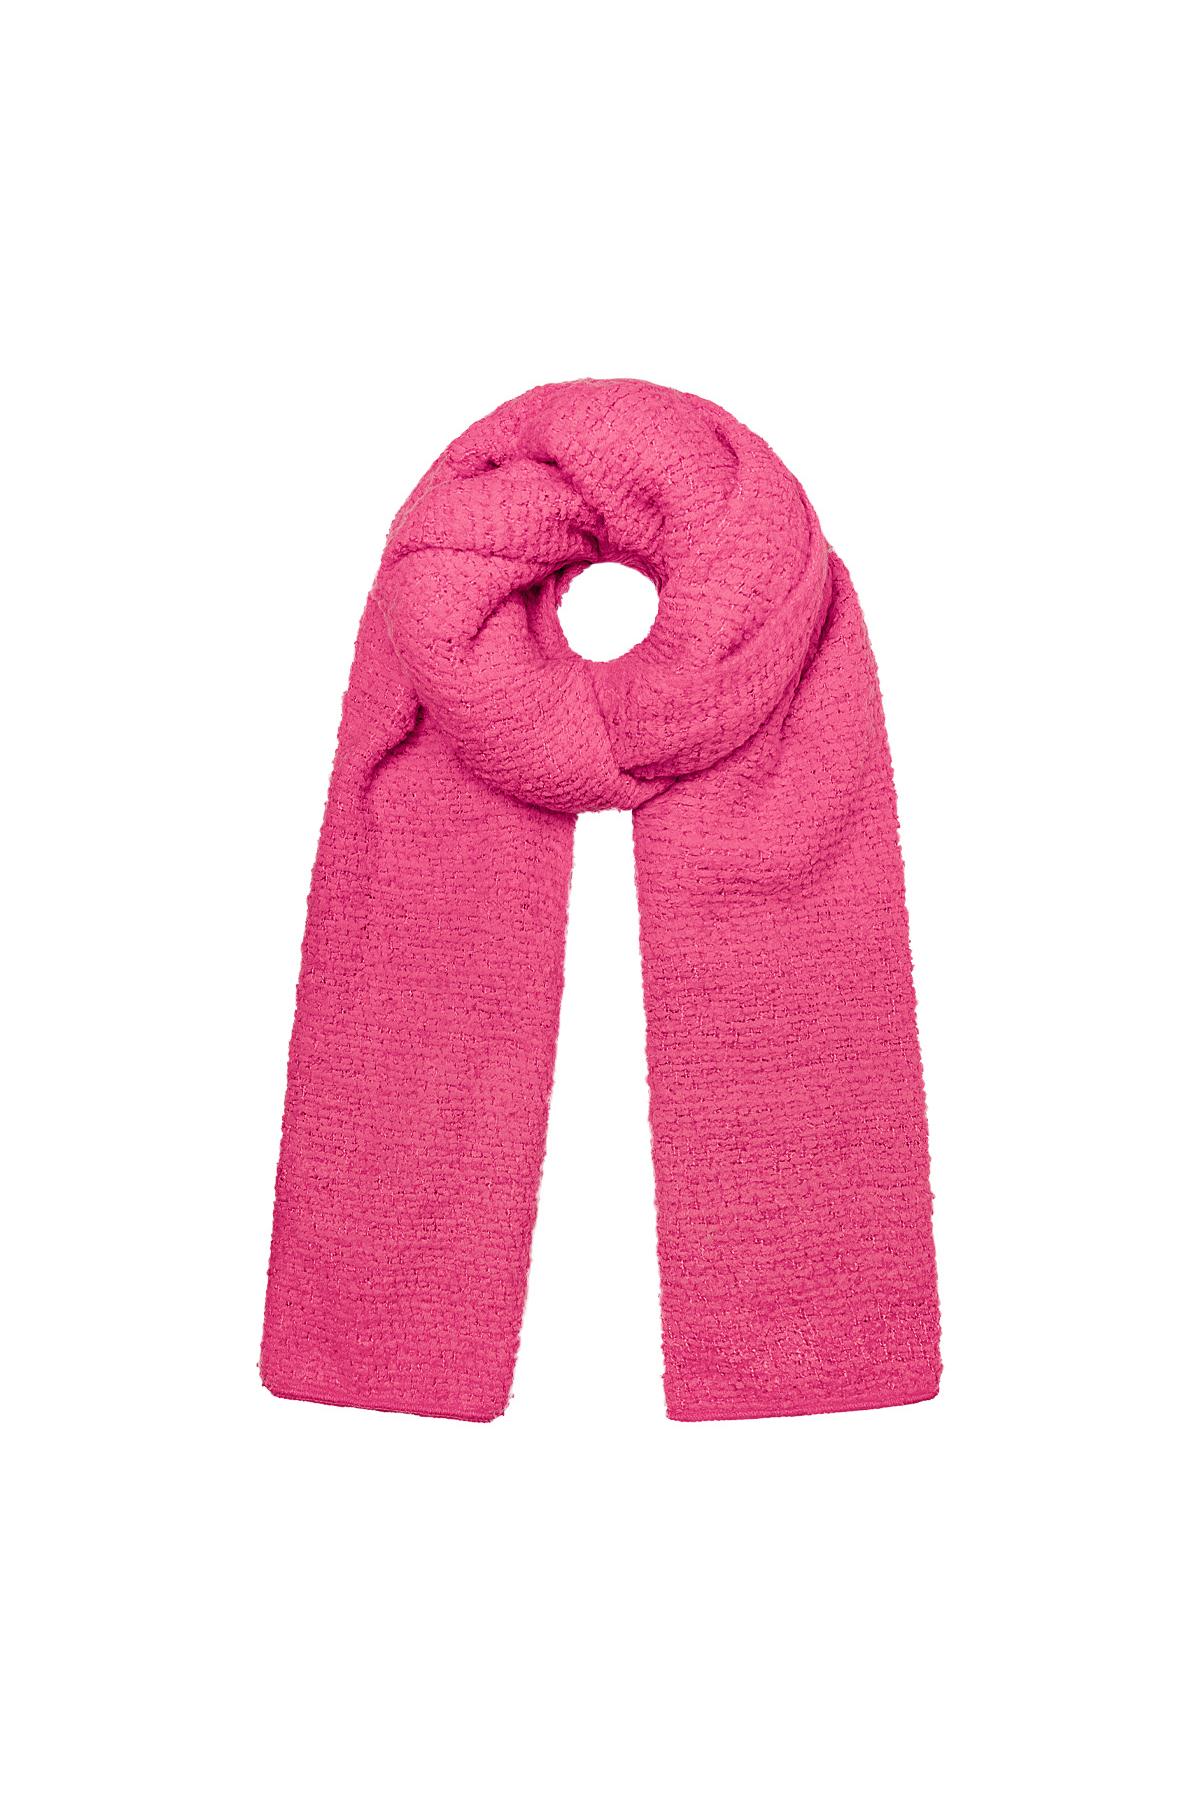 Winterschal mit Reliefmuster rosa Polyester